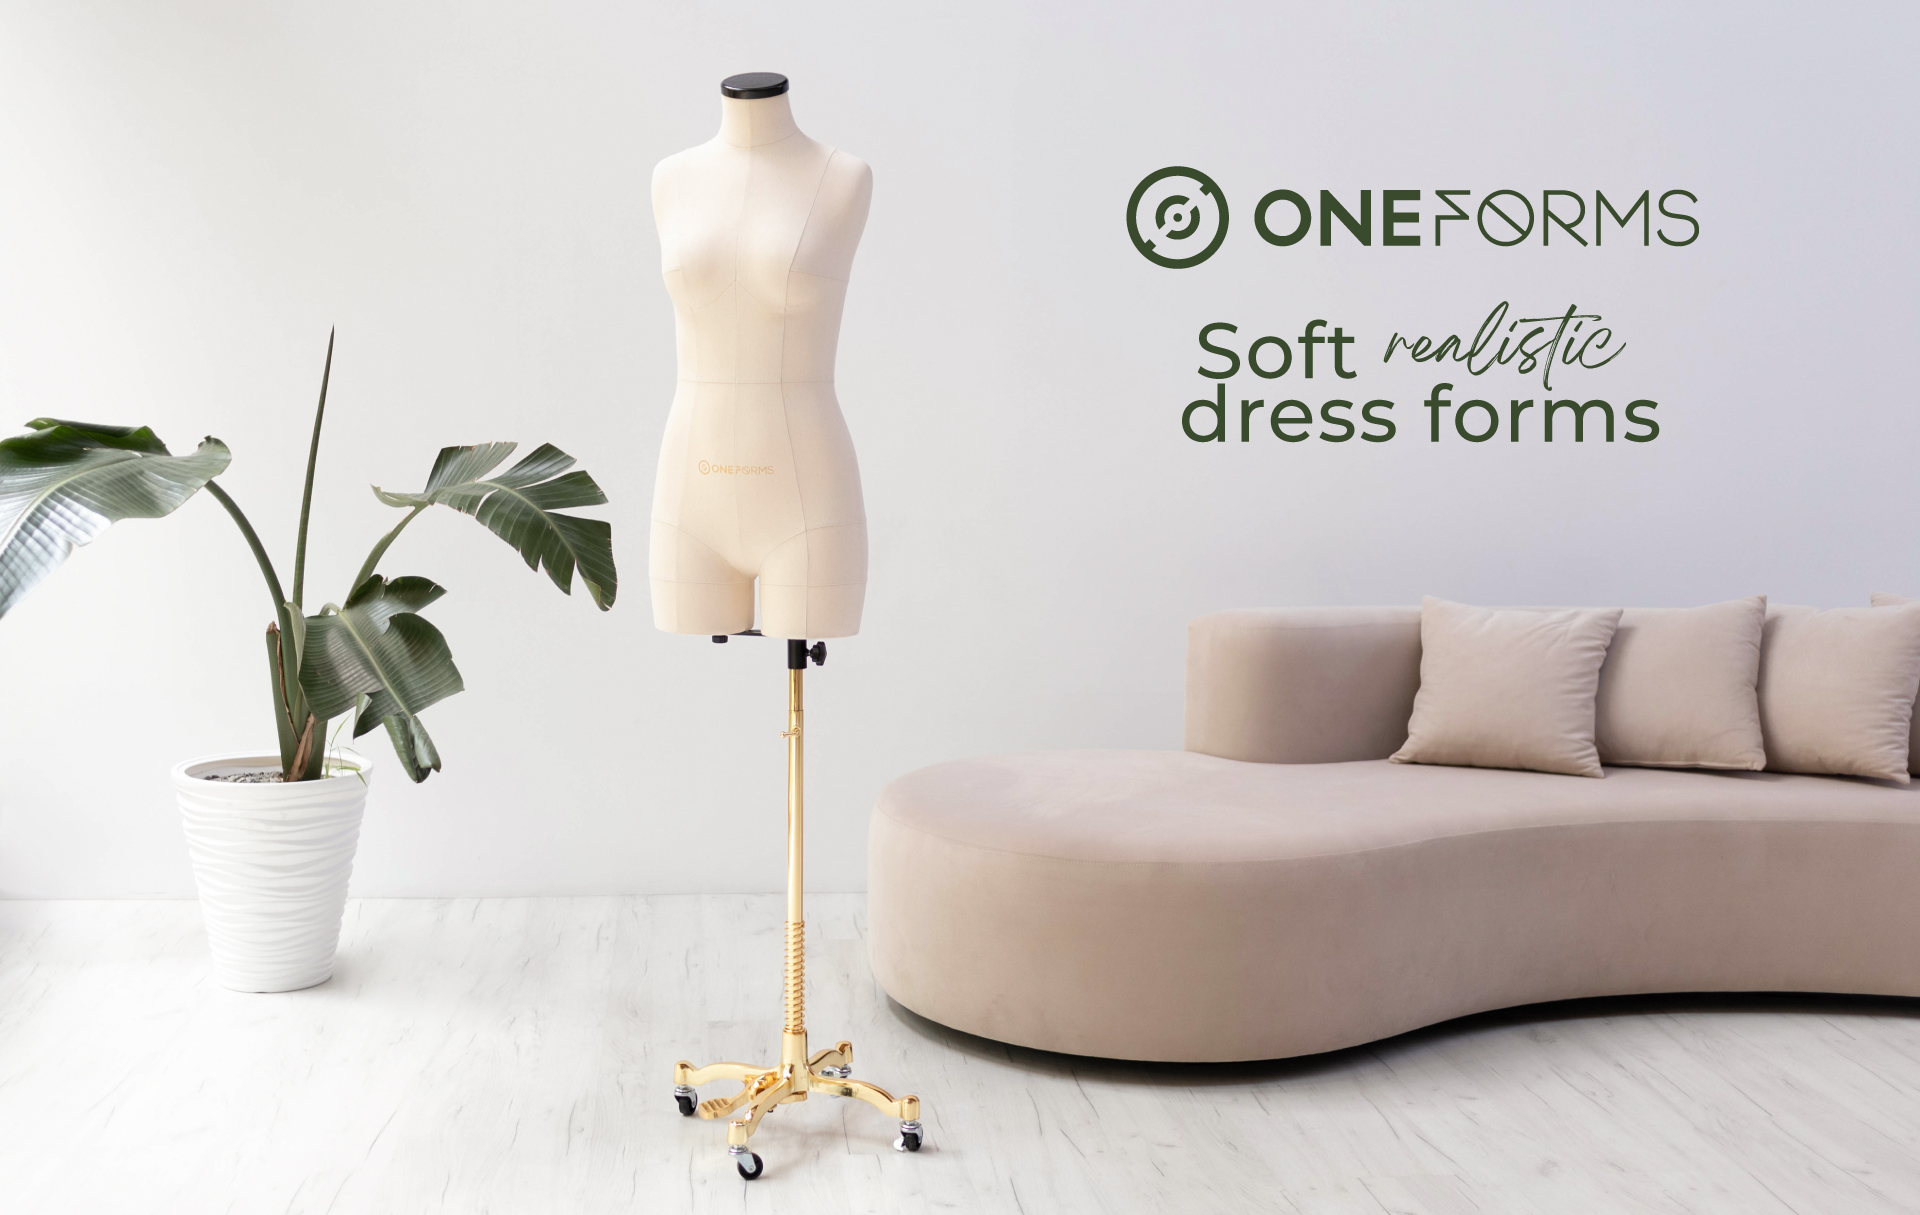 Soft tailor’s dress form Monica, Luxe set